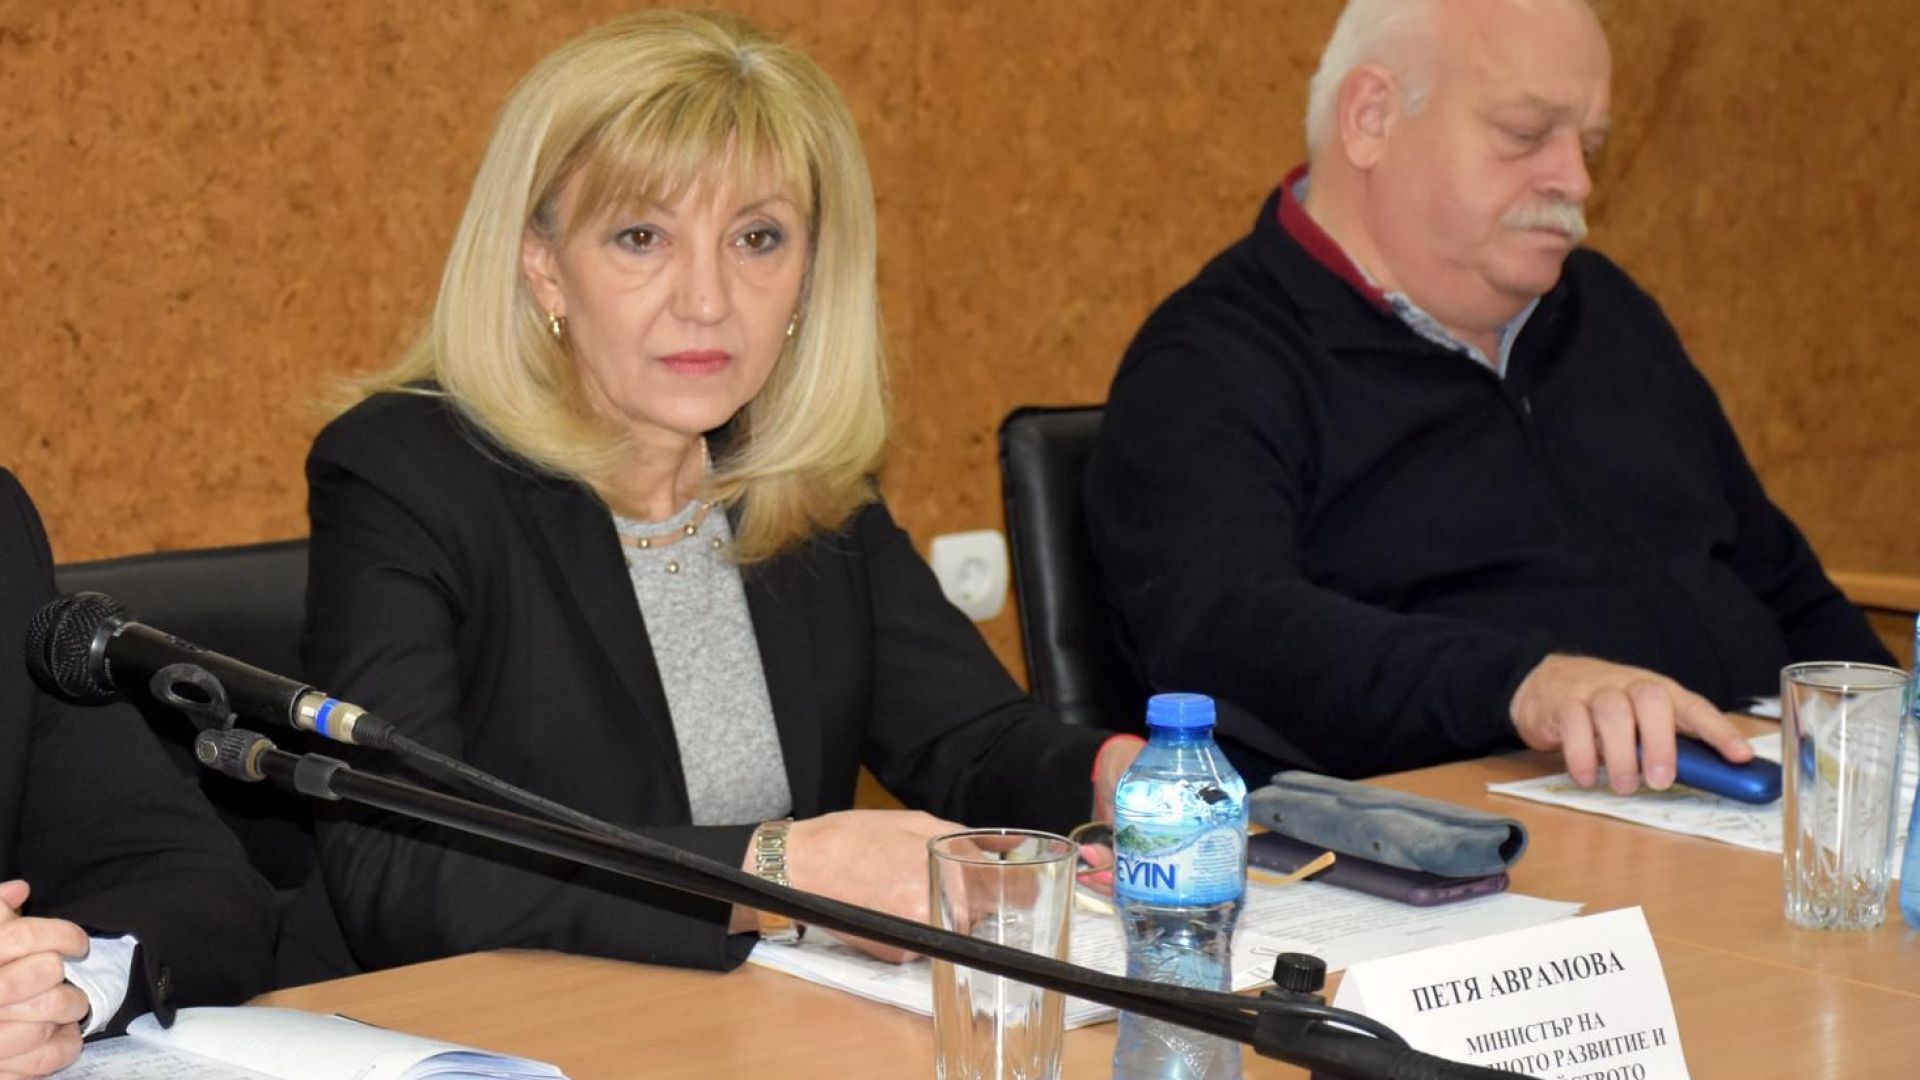 Аврамова критикува заместника си за писмото за сградата "Златен век"